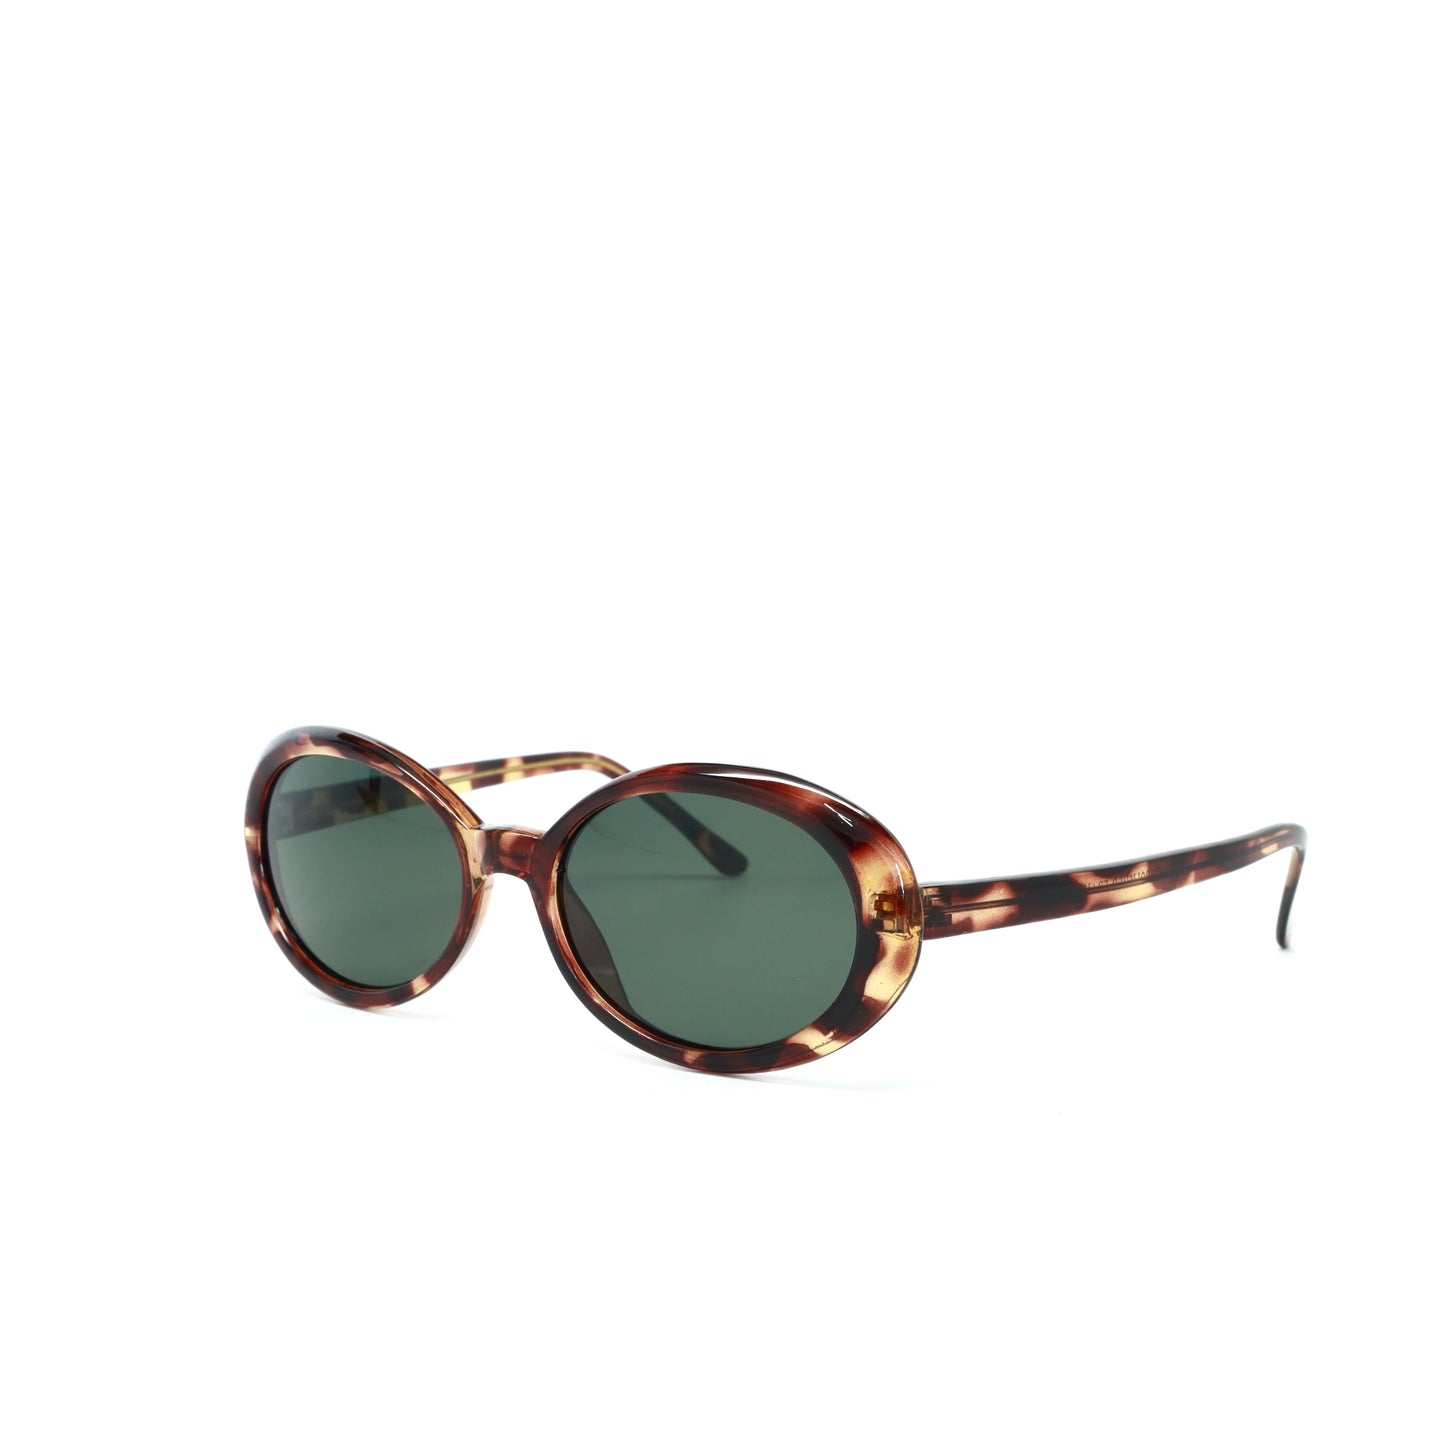 Vintage Standard Size 90s Mod Original Hermosa Oval Sunglasses - Tortoise Brown